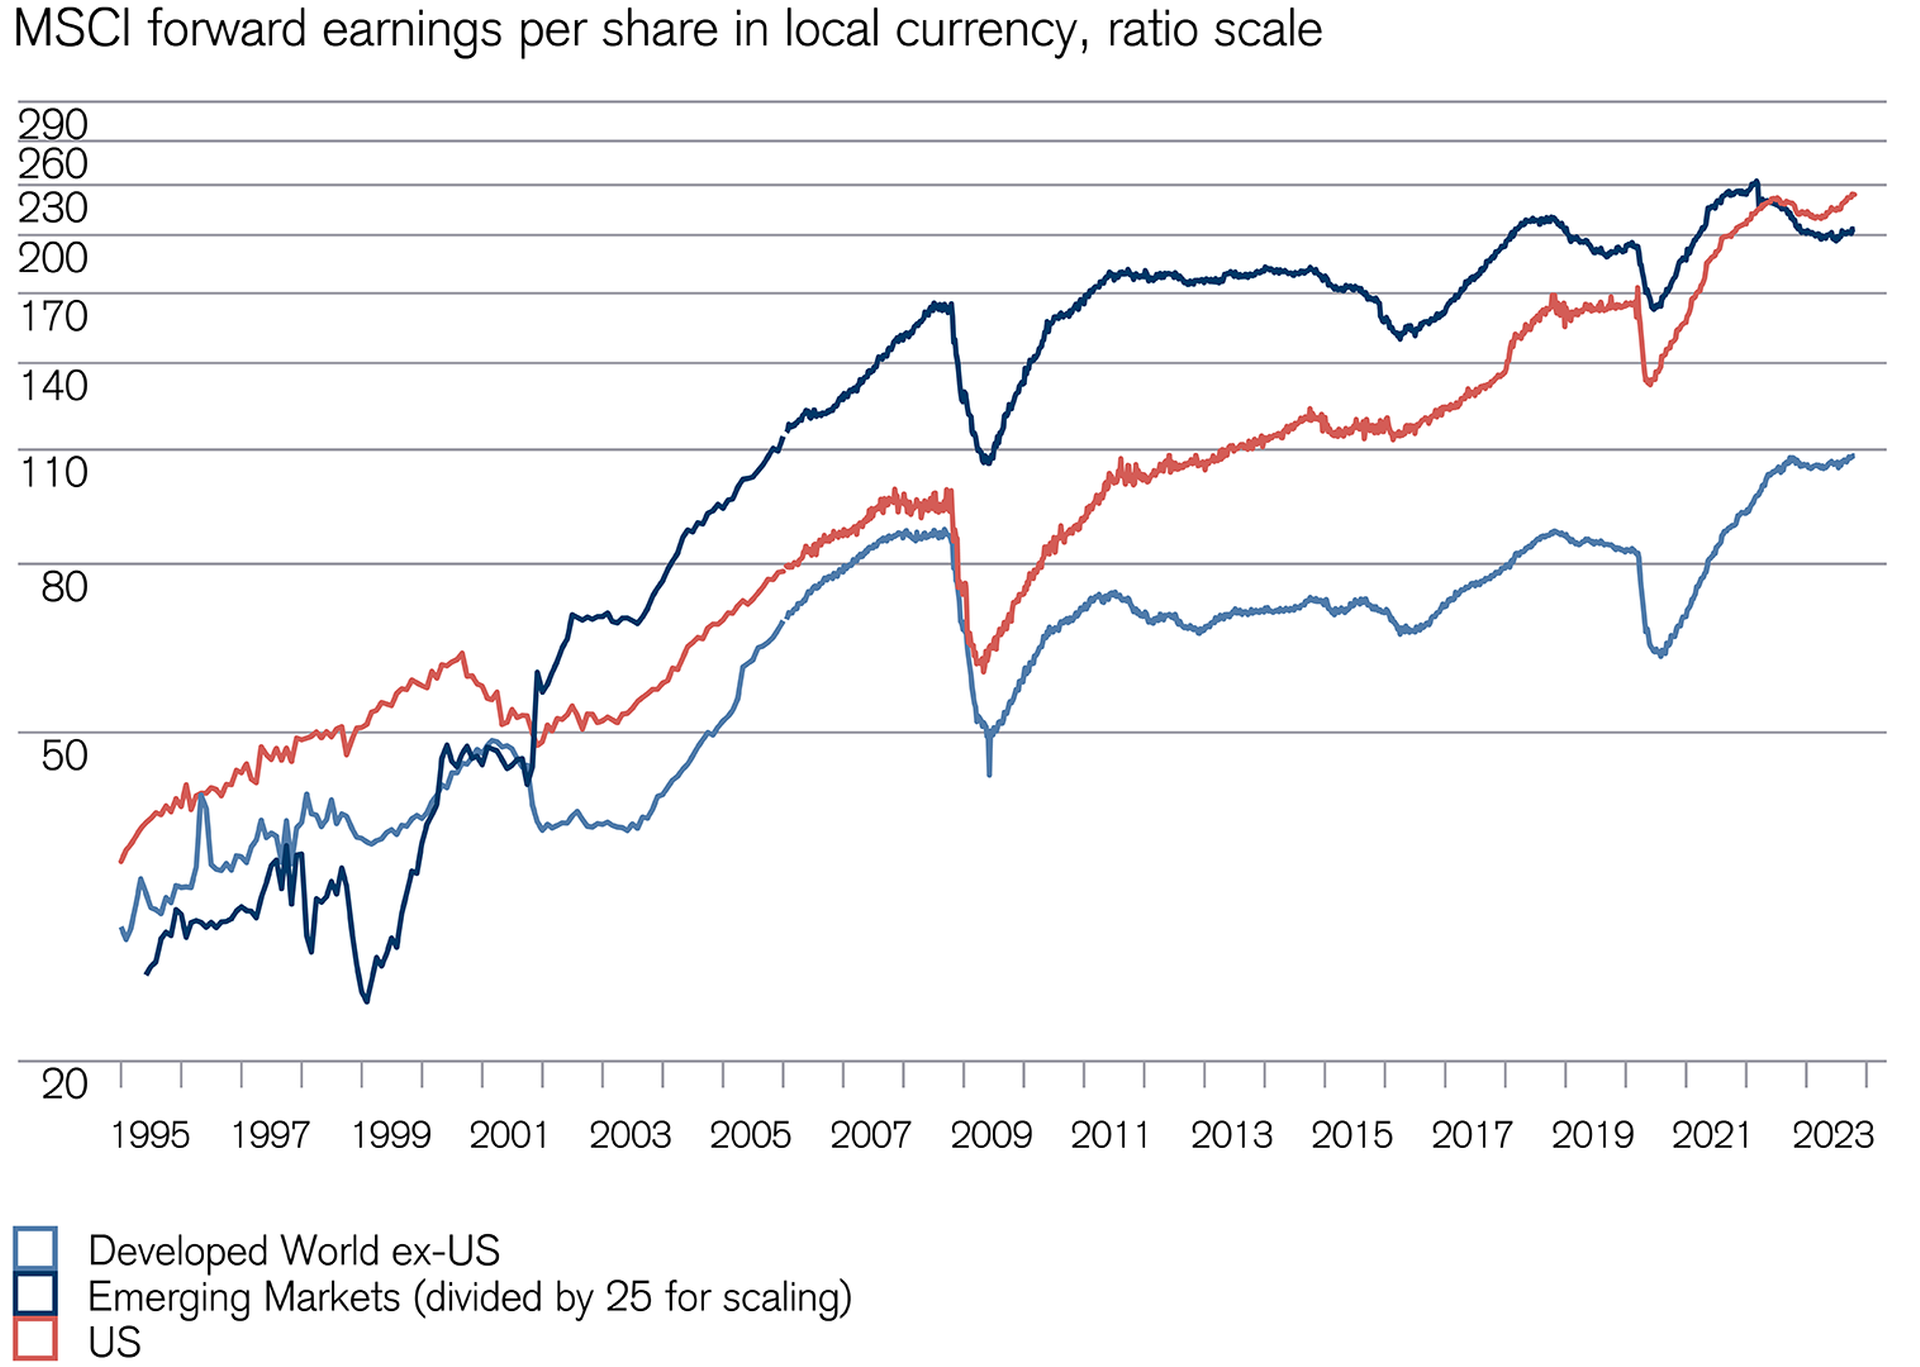 Capital productivity: High earnings per share